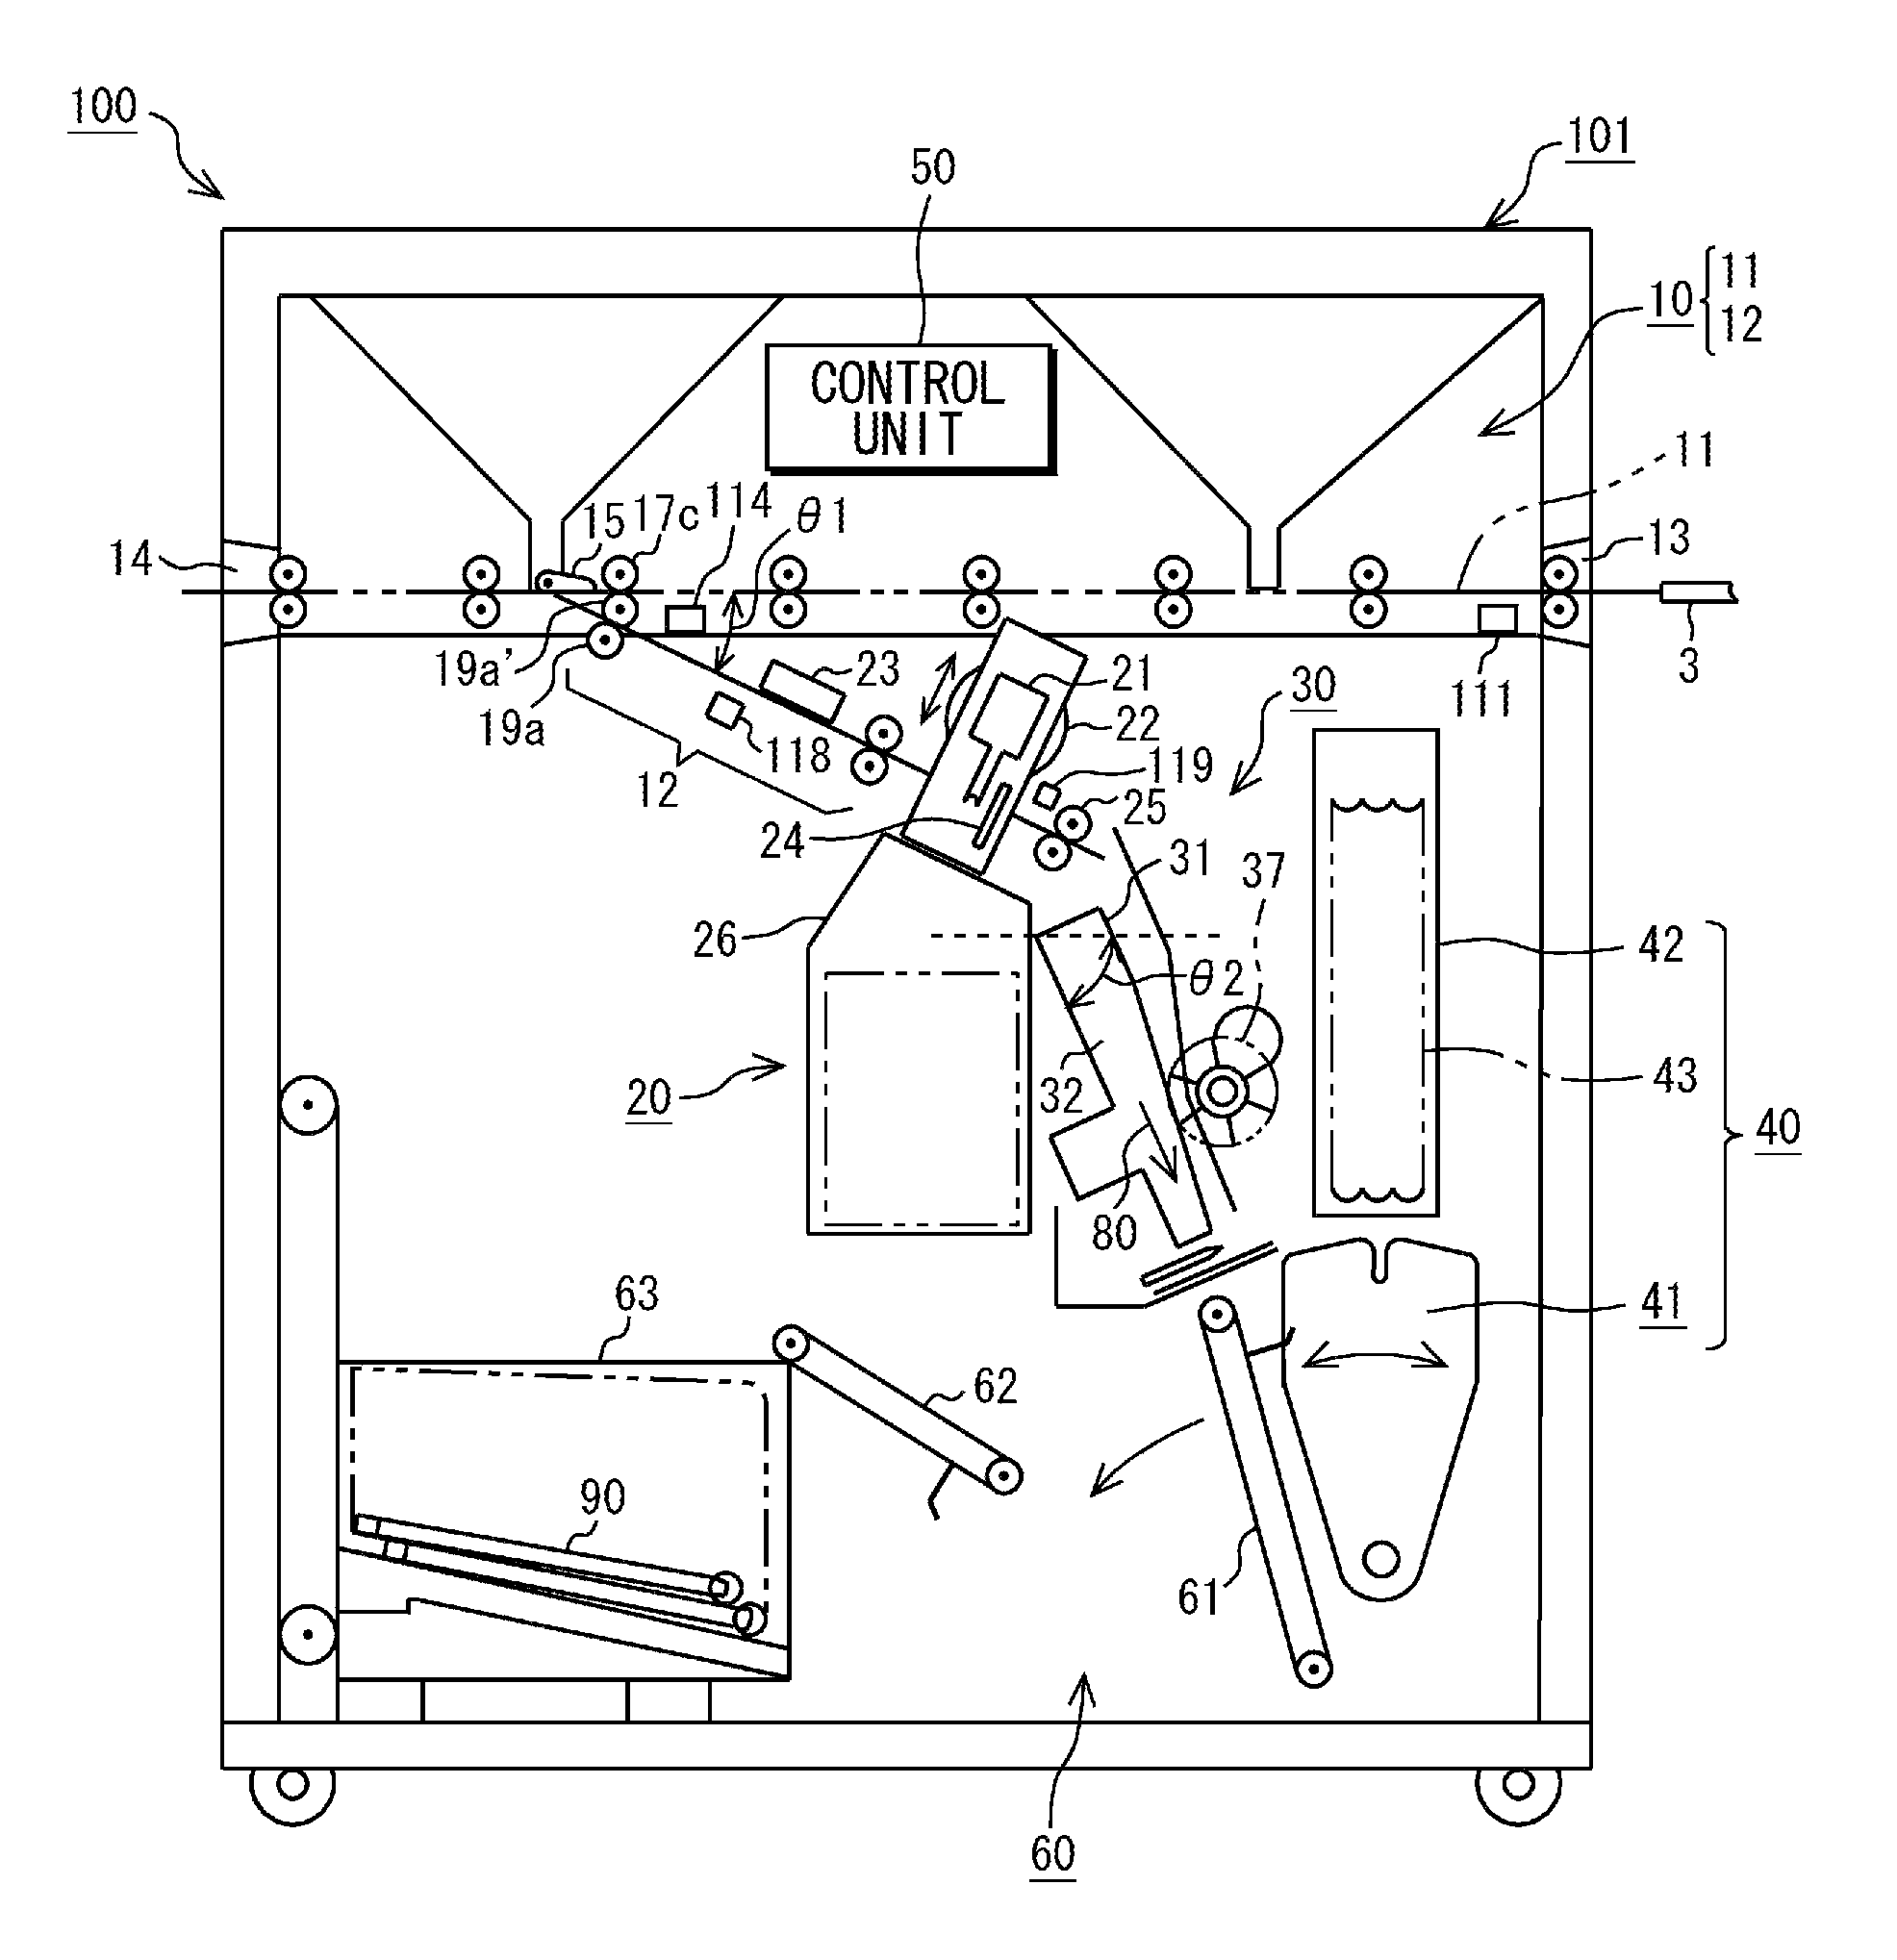 Paper-sheet handling device